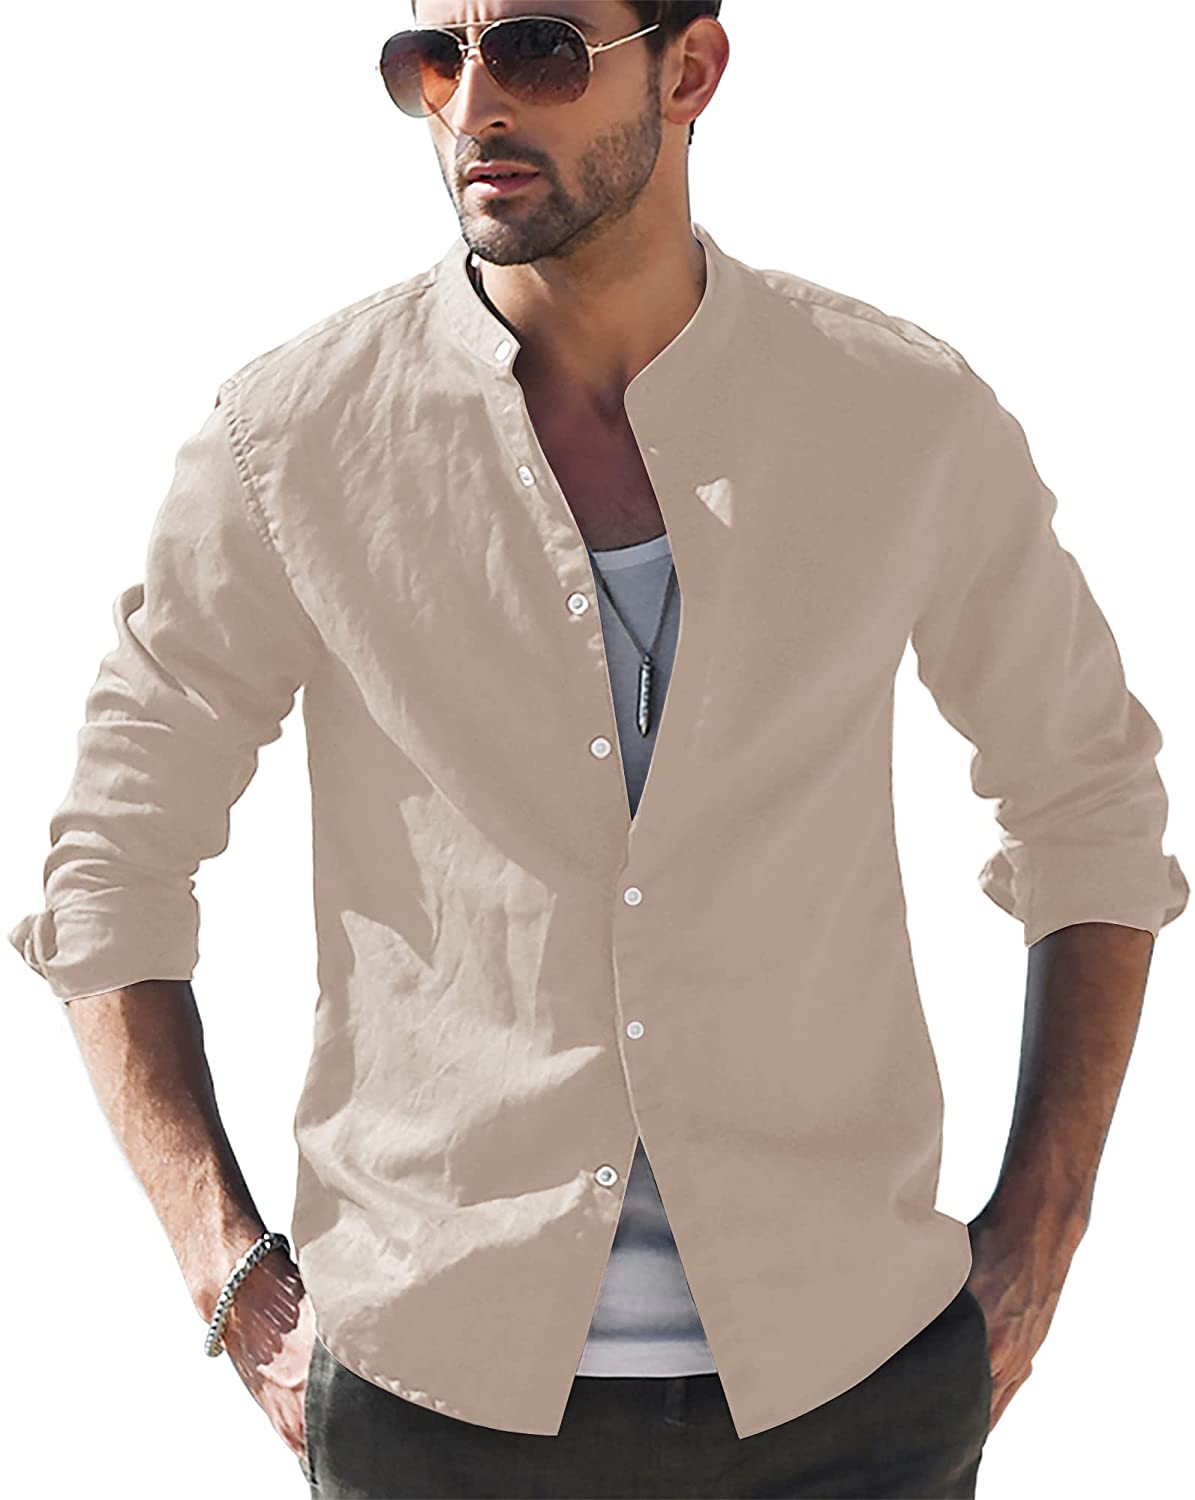 LVCBL Mens Casual Cotton Shirt Long Sleeve Band Collar Henley Shirt Tops 